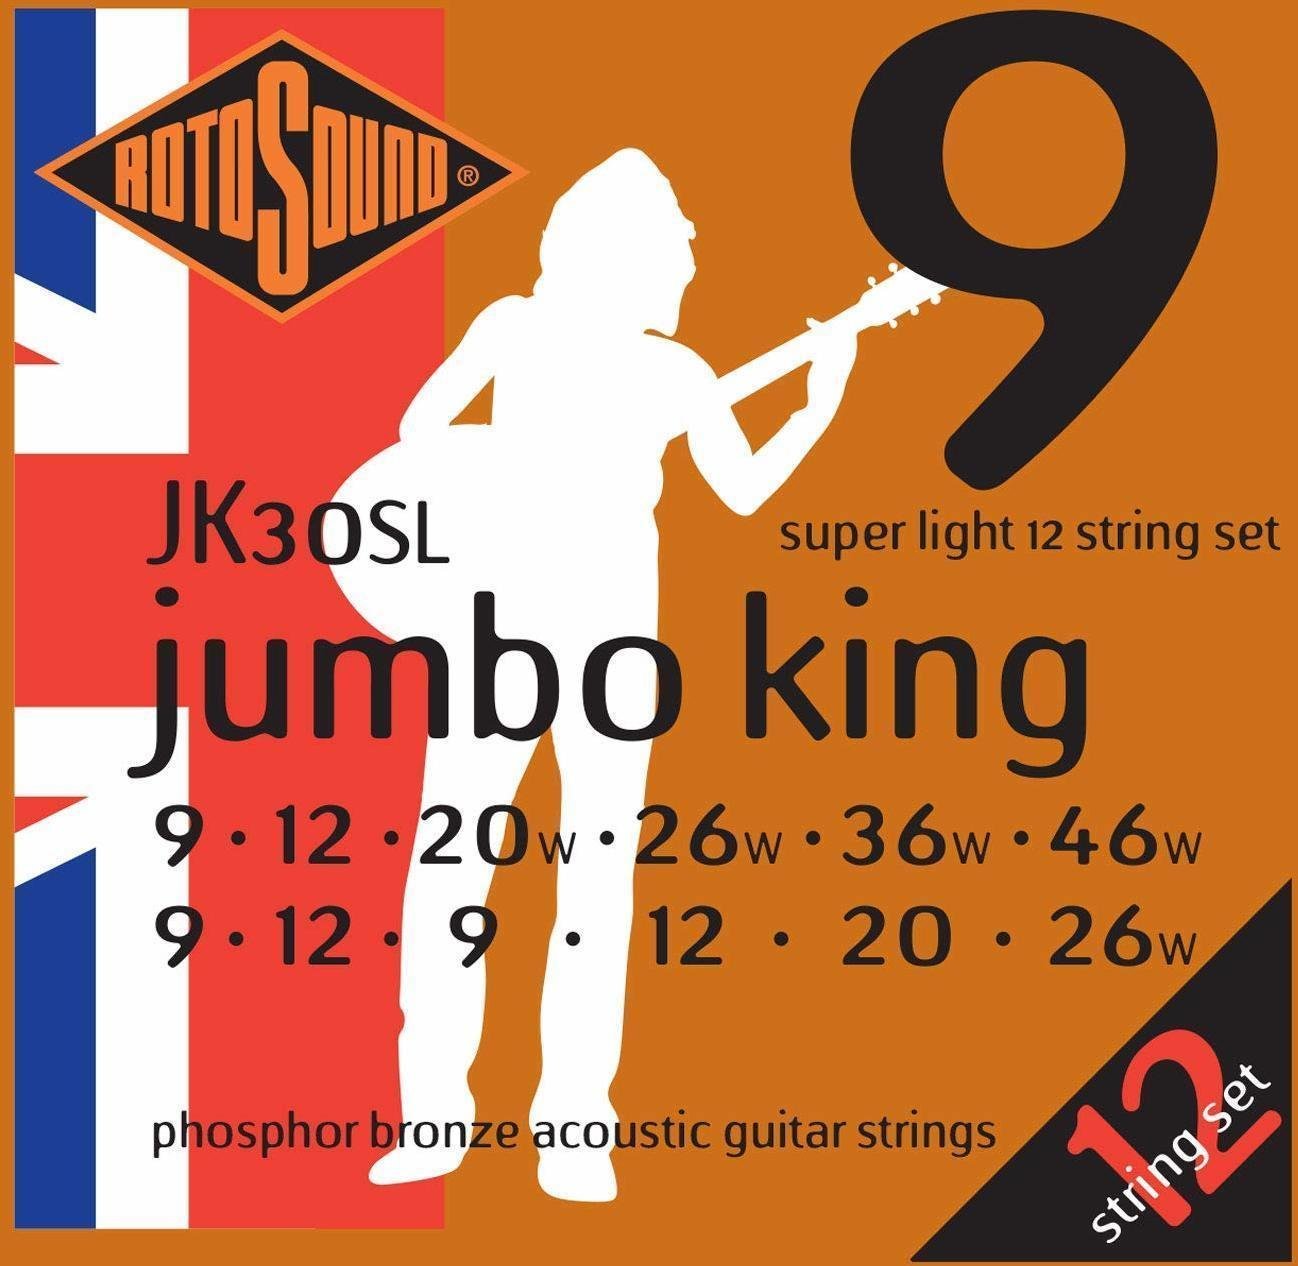 Rotosound JK30SL Jumbo King Rotosound